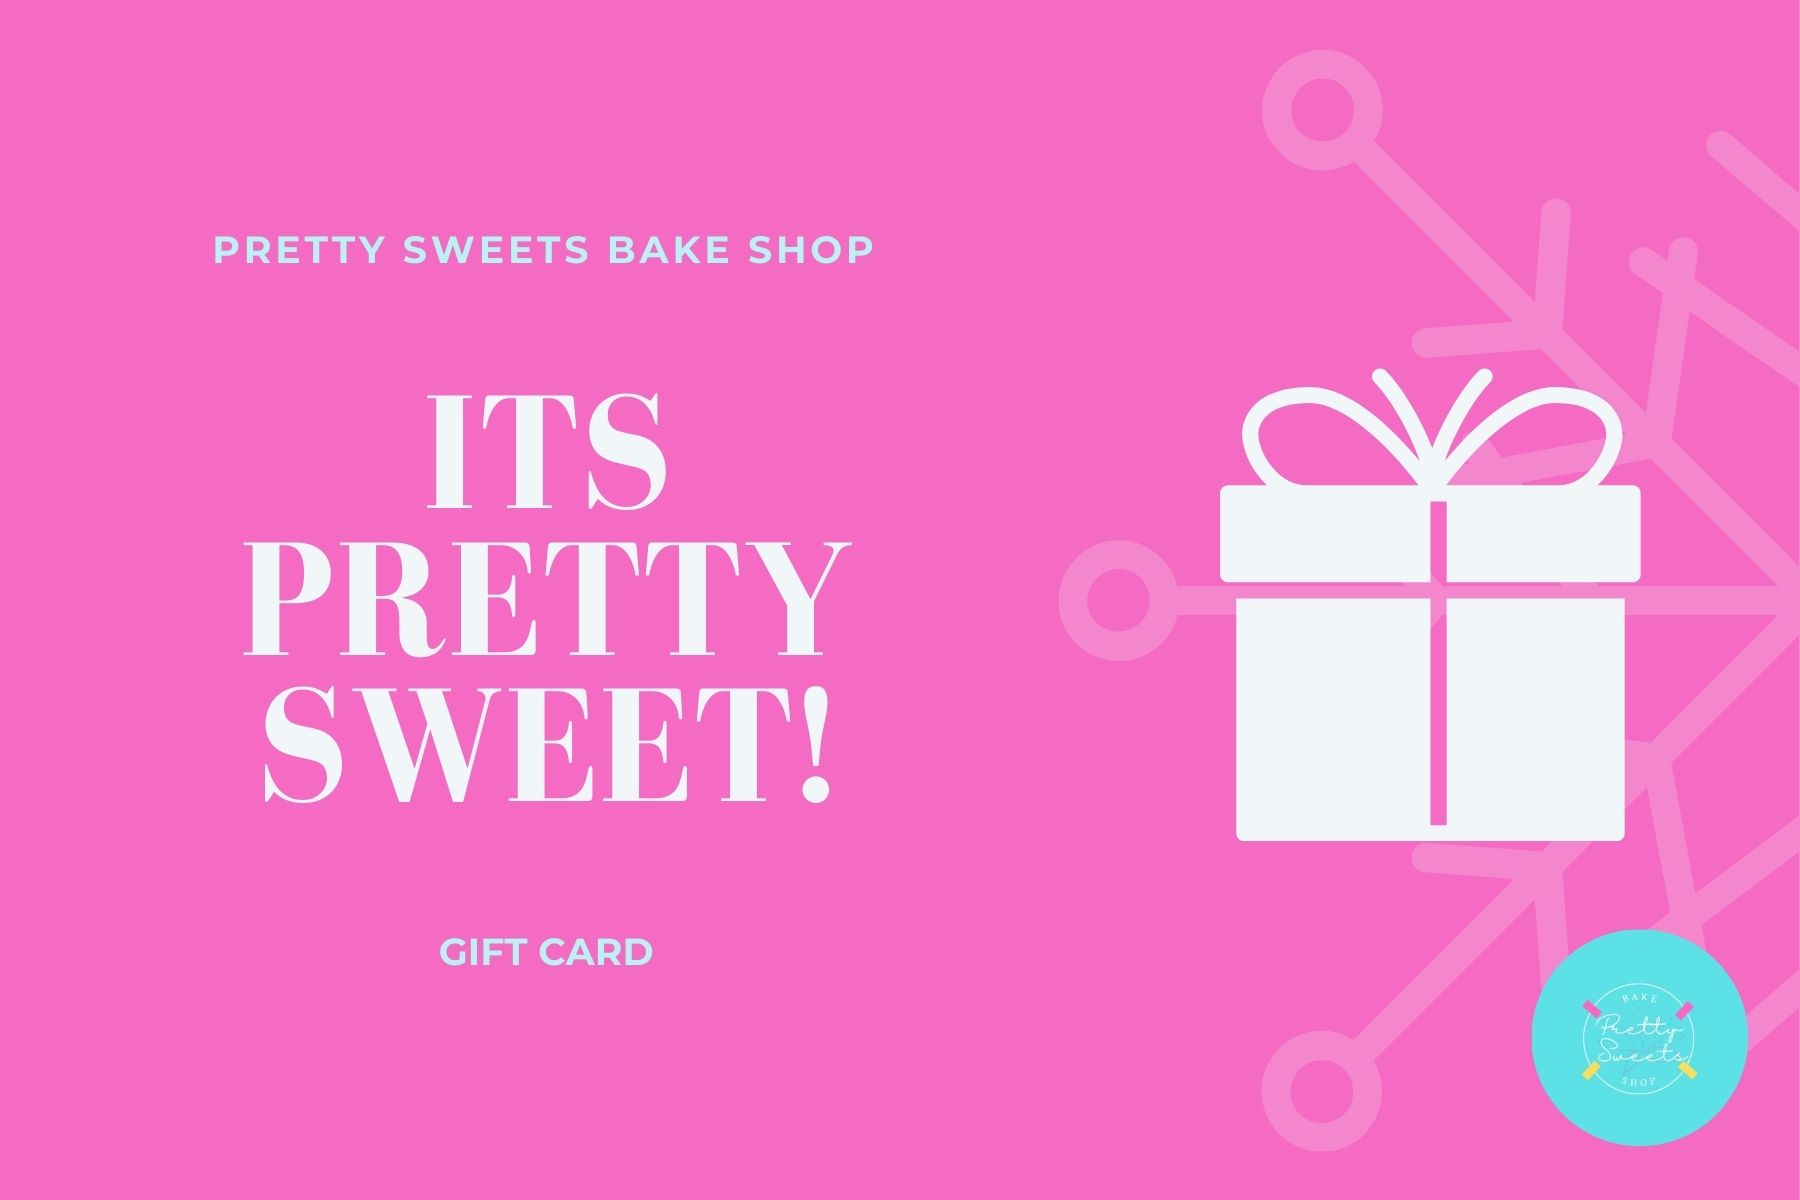 Pretty Sweets e-gift card